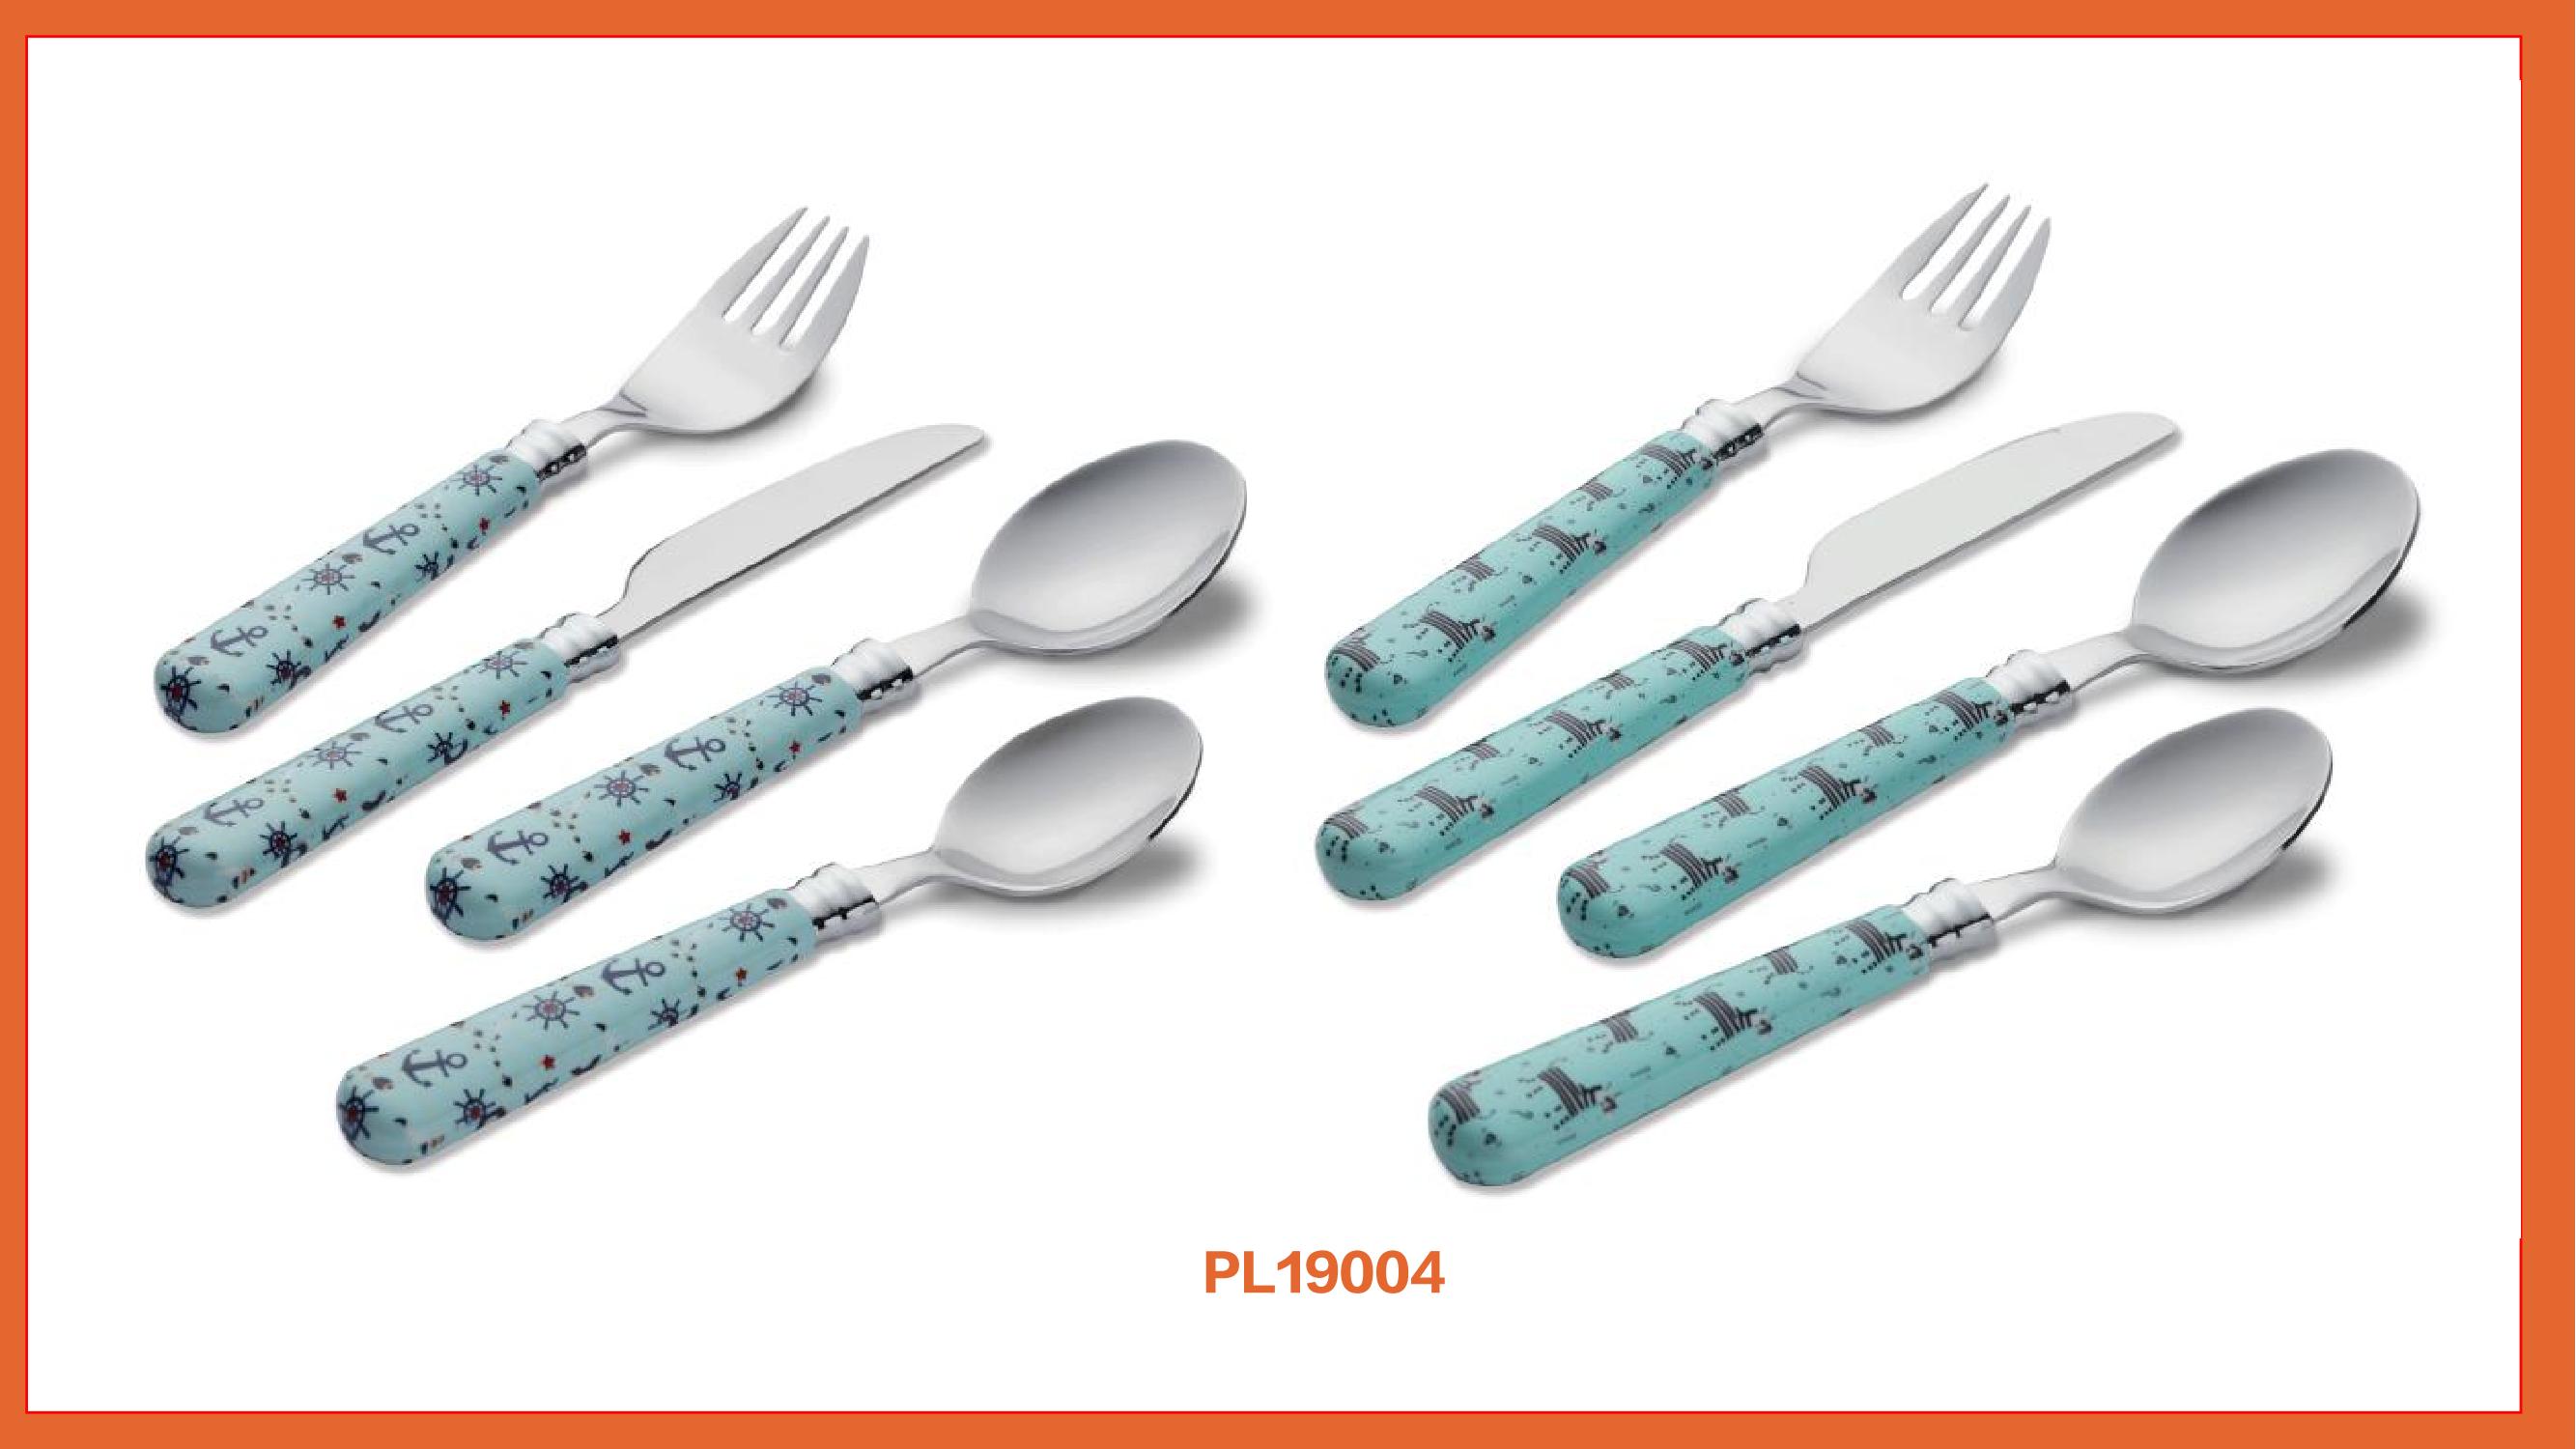 catalogue of plastic handle cutlery_11.jpg